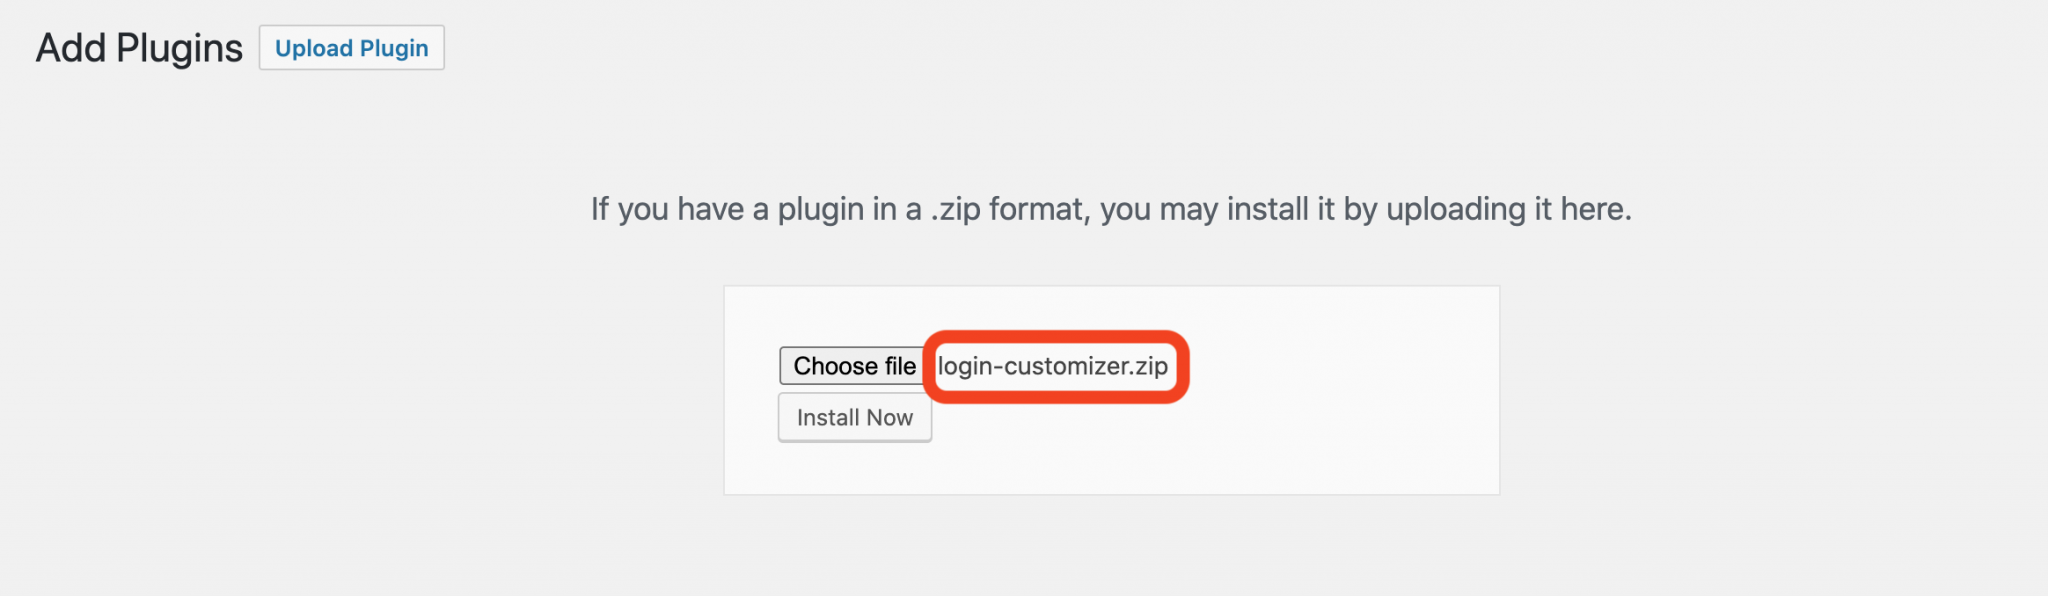 Login customizer upload plugin zip file on wordpress admin